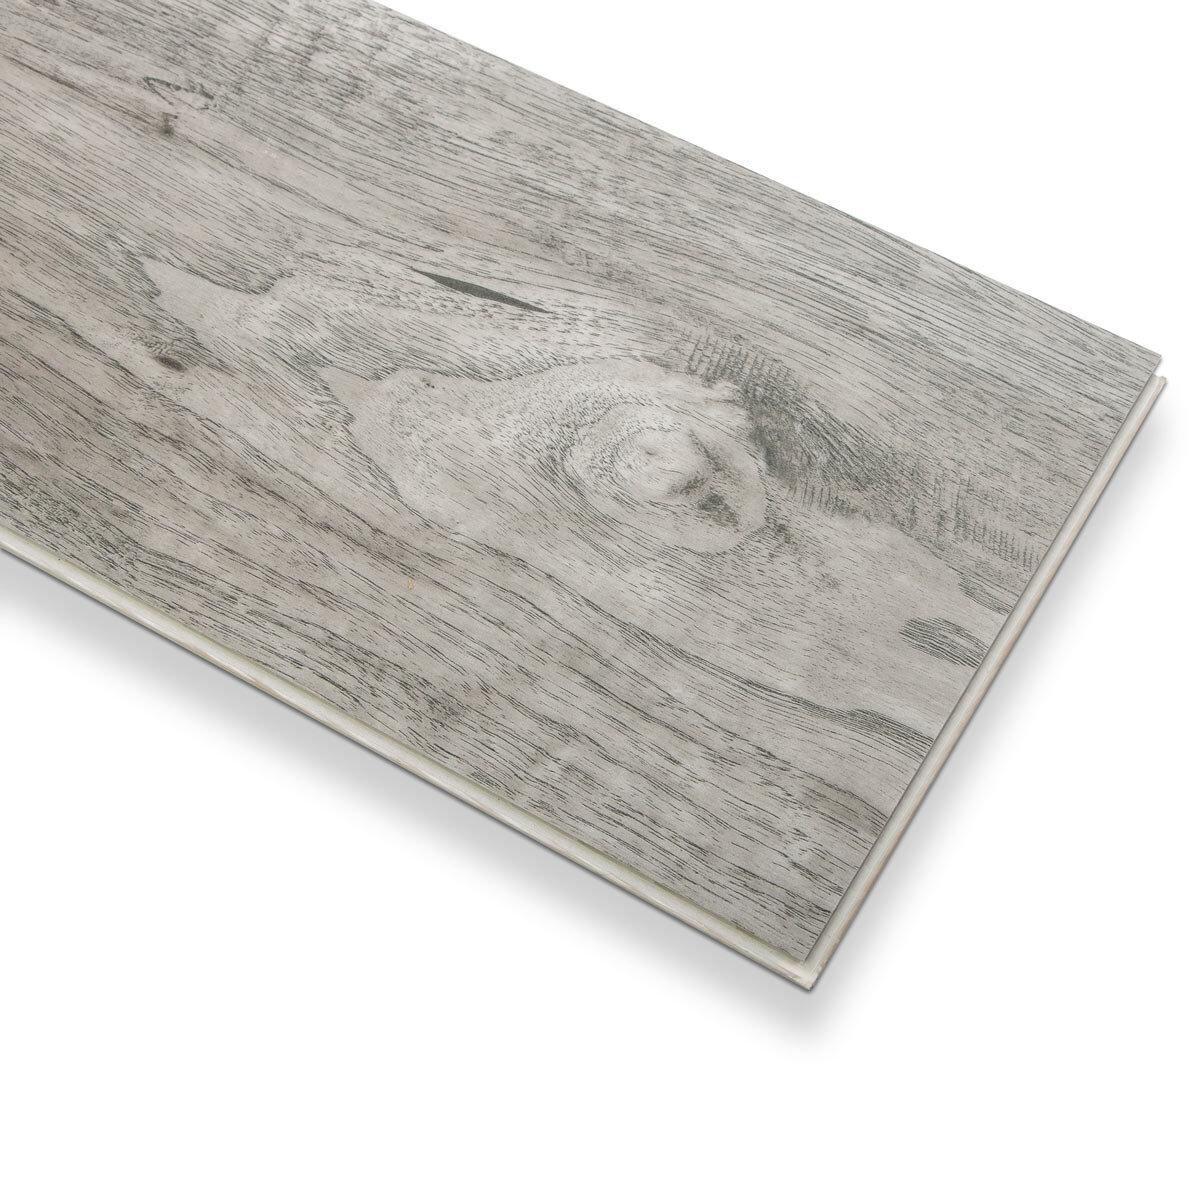 Golden Select Modern Grey Rigid Core SPC Luxury Vinyl Flooring Planks with Foam Underlay - 1.33 m² Per Pack